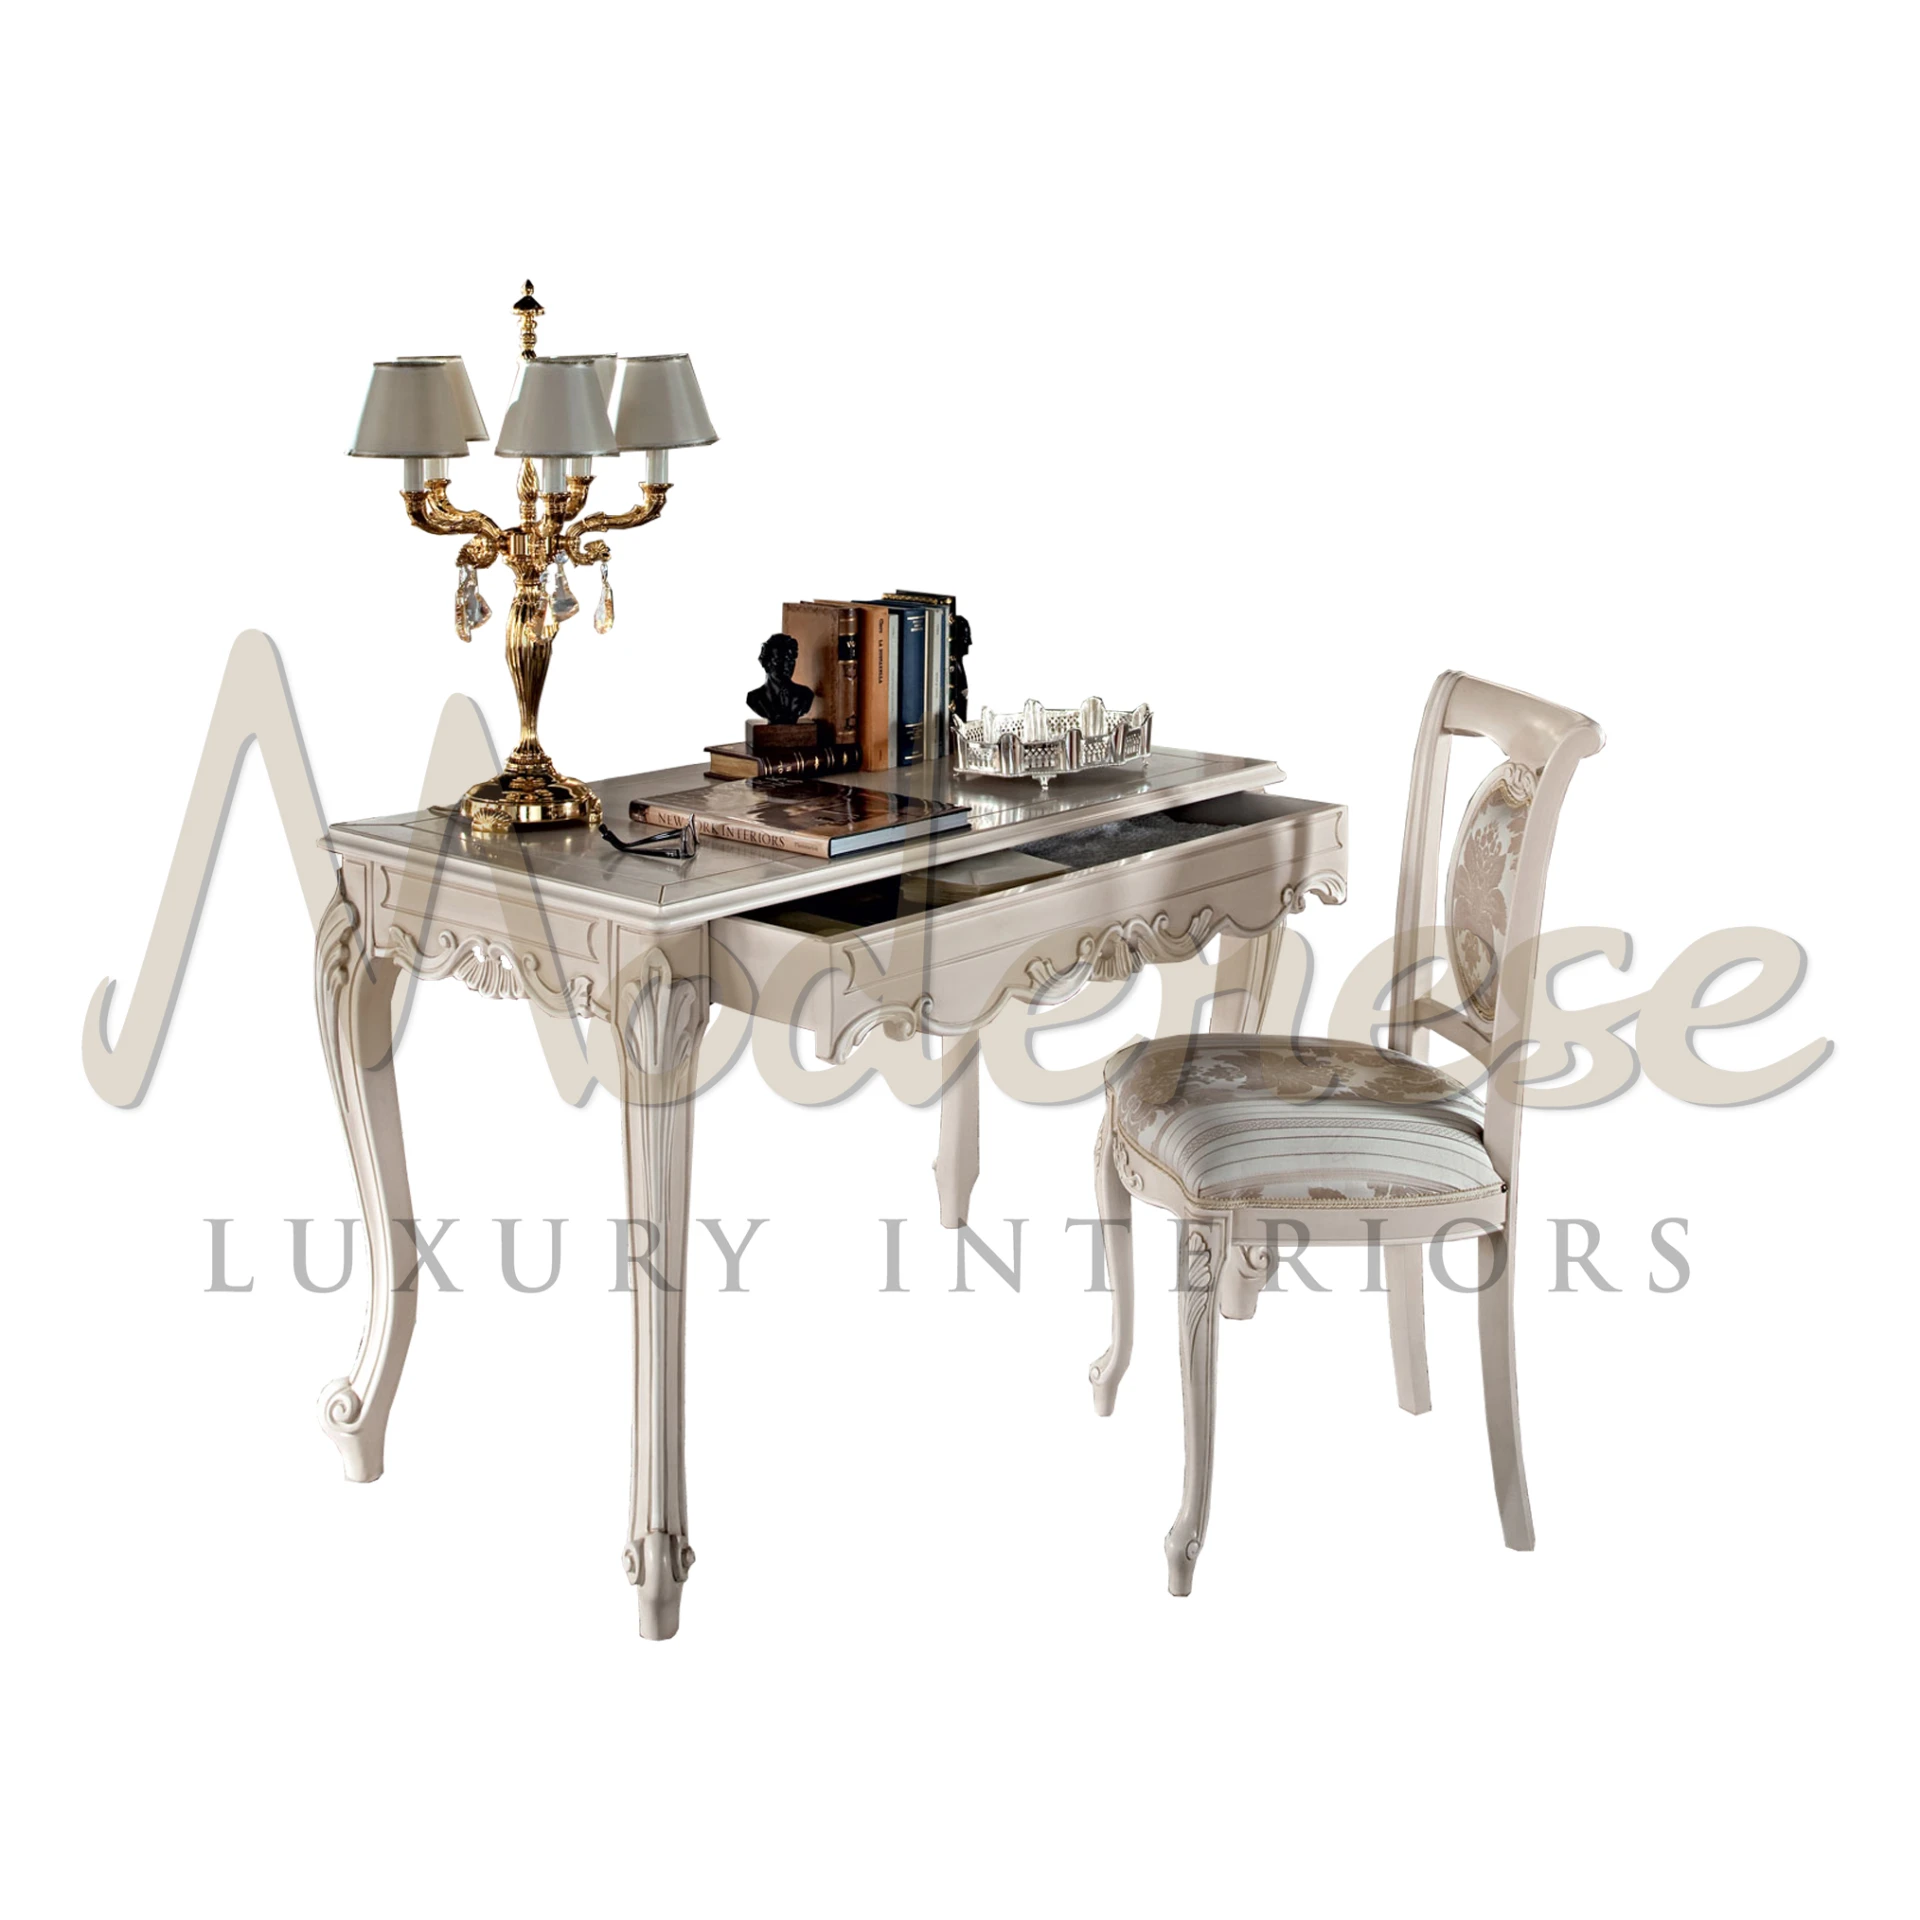 Elegant classic writing desk table for classical interior spaces